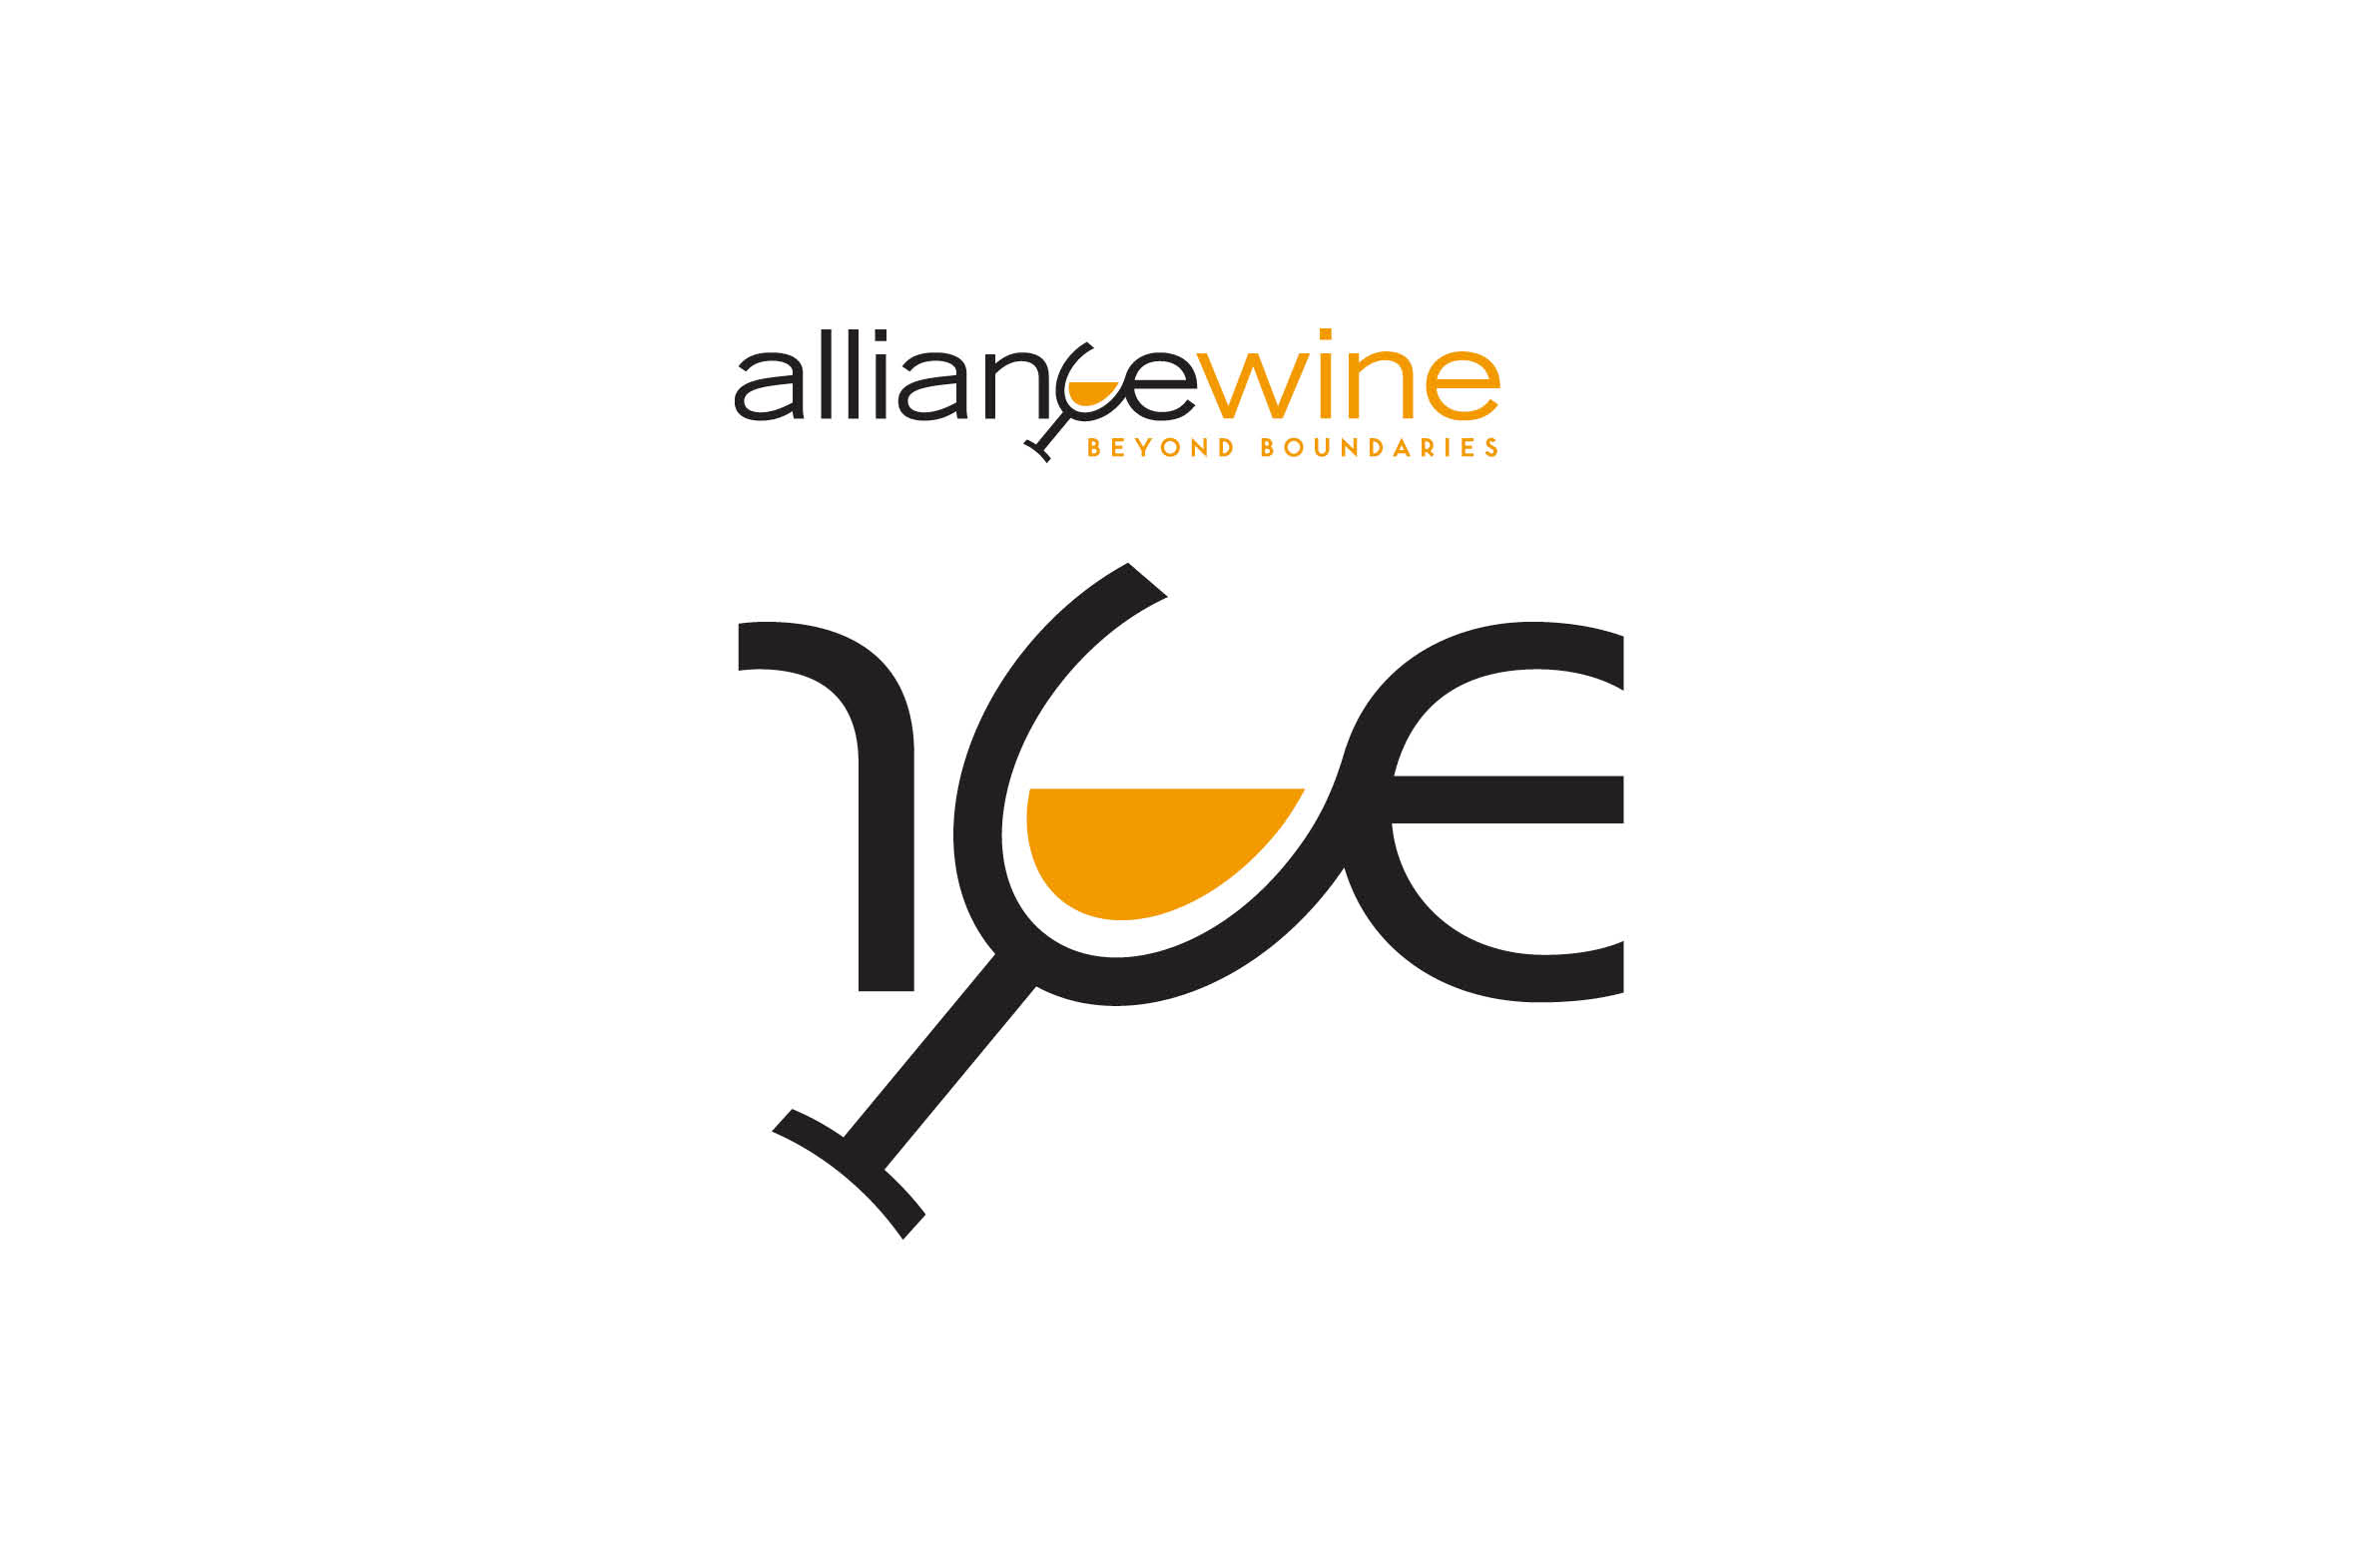 Alliance Wine